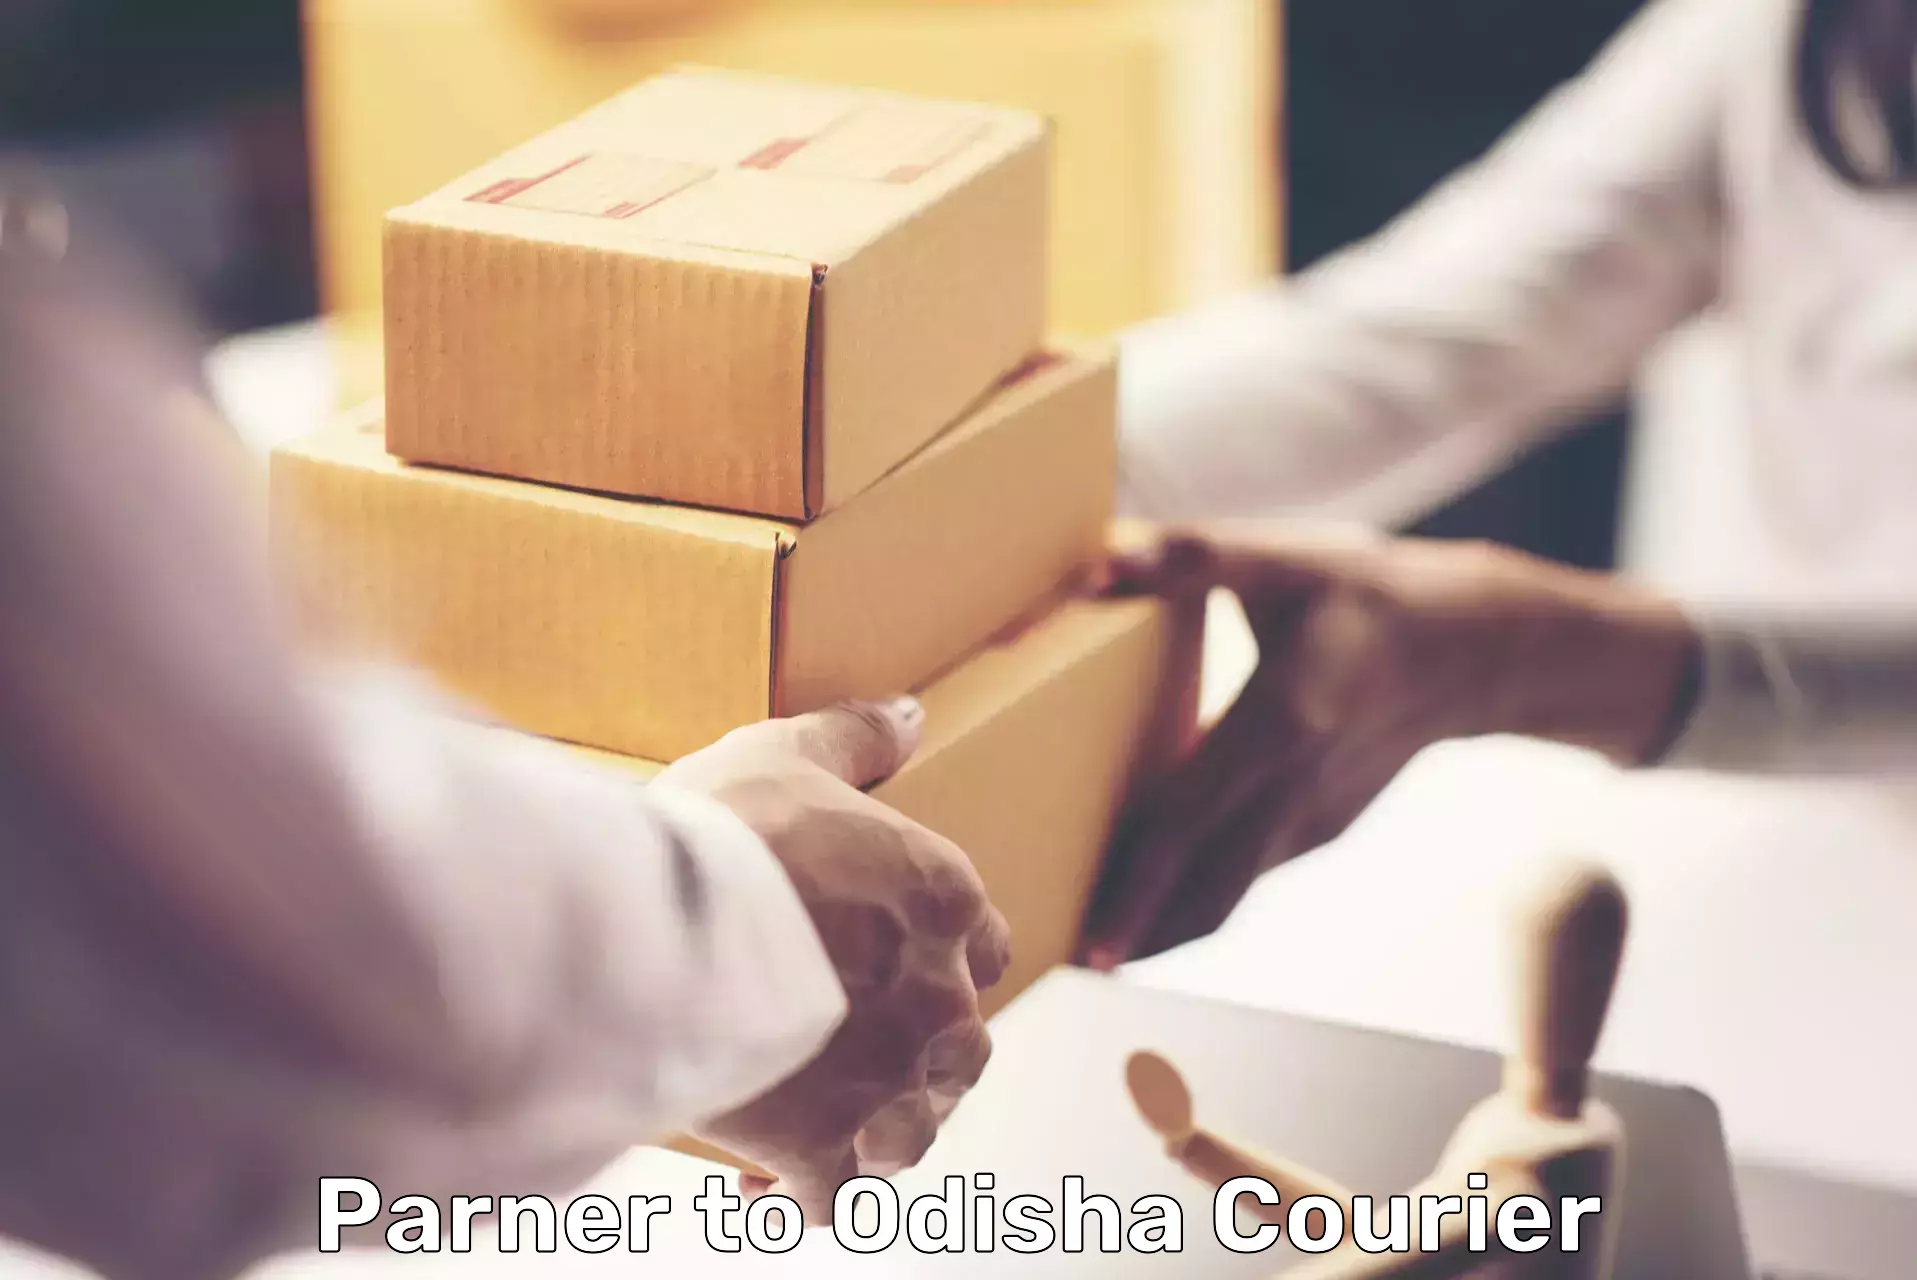 Modern courier technology Parner to Odisha